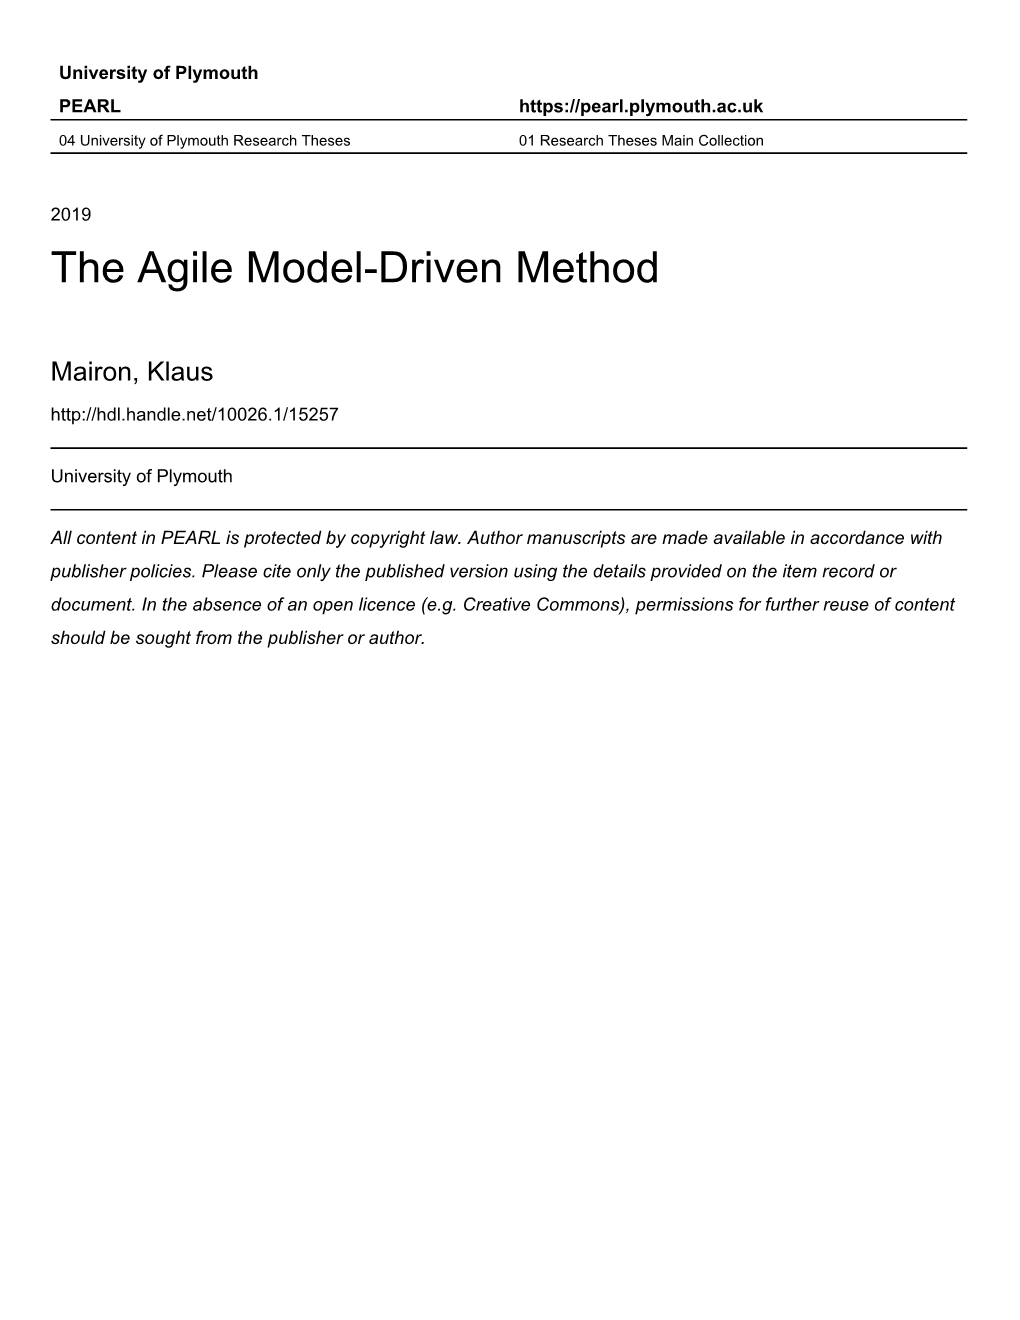 The Agile Model-Driven Method